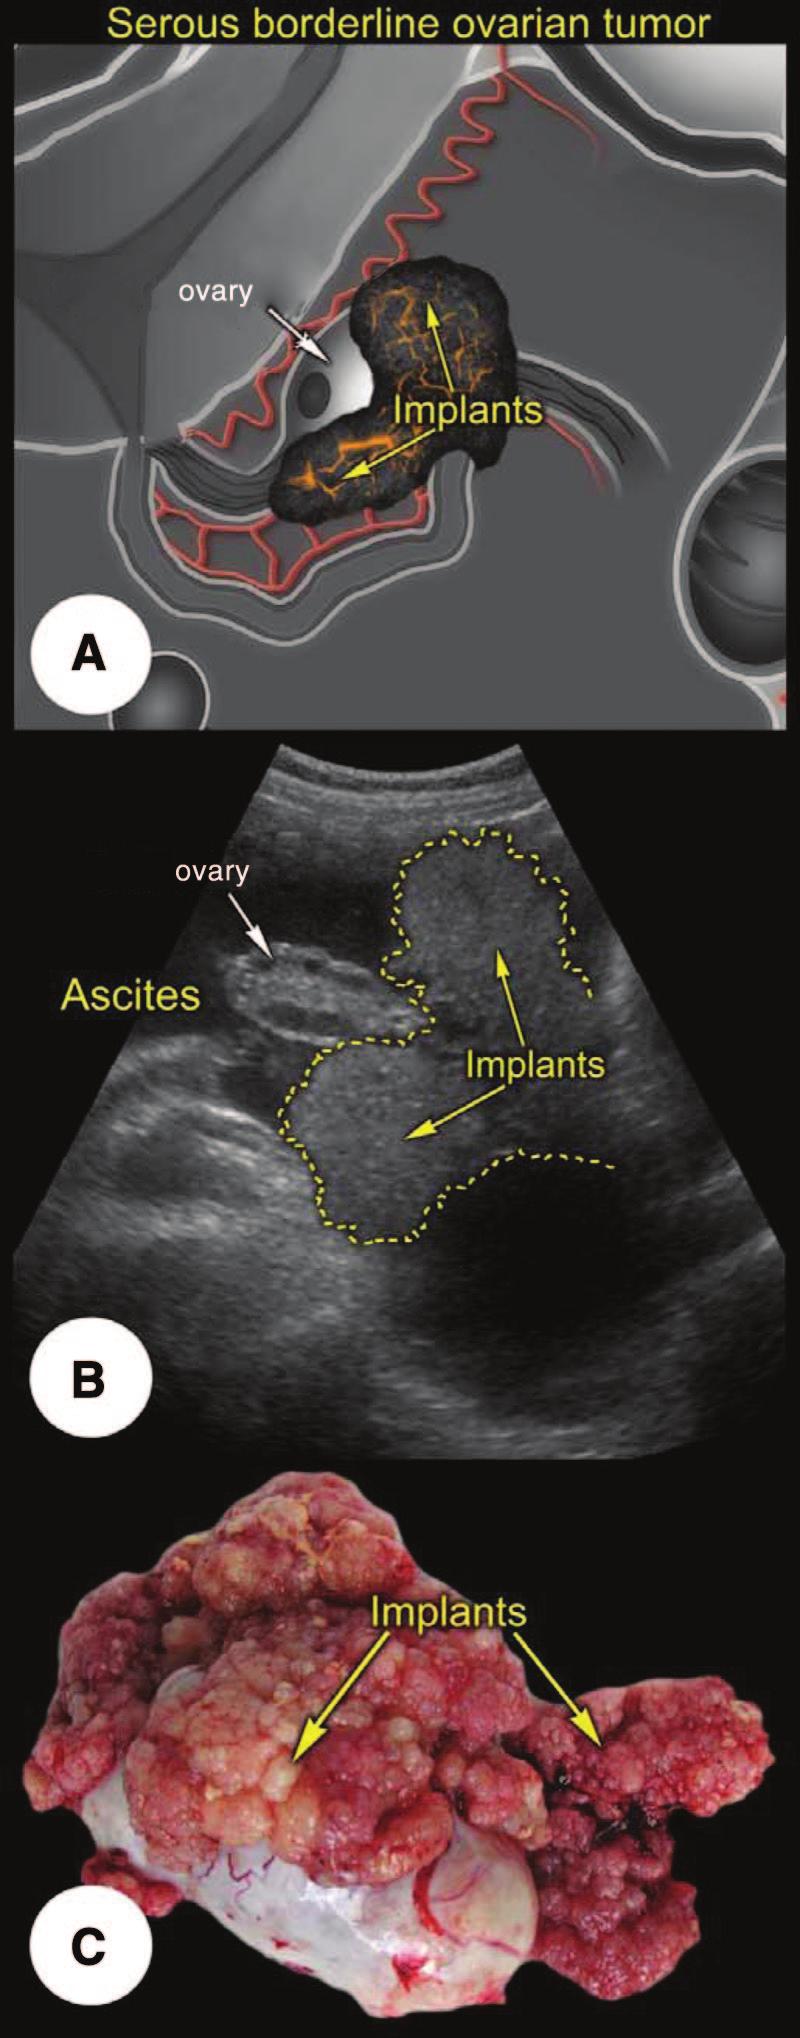 Fischerova, Zikan, Dundr et al. 11 Figure 4. Exophytic implants on the surface of contralateral ovary (transabdominal scan).